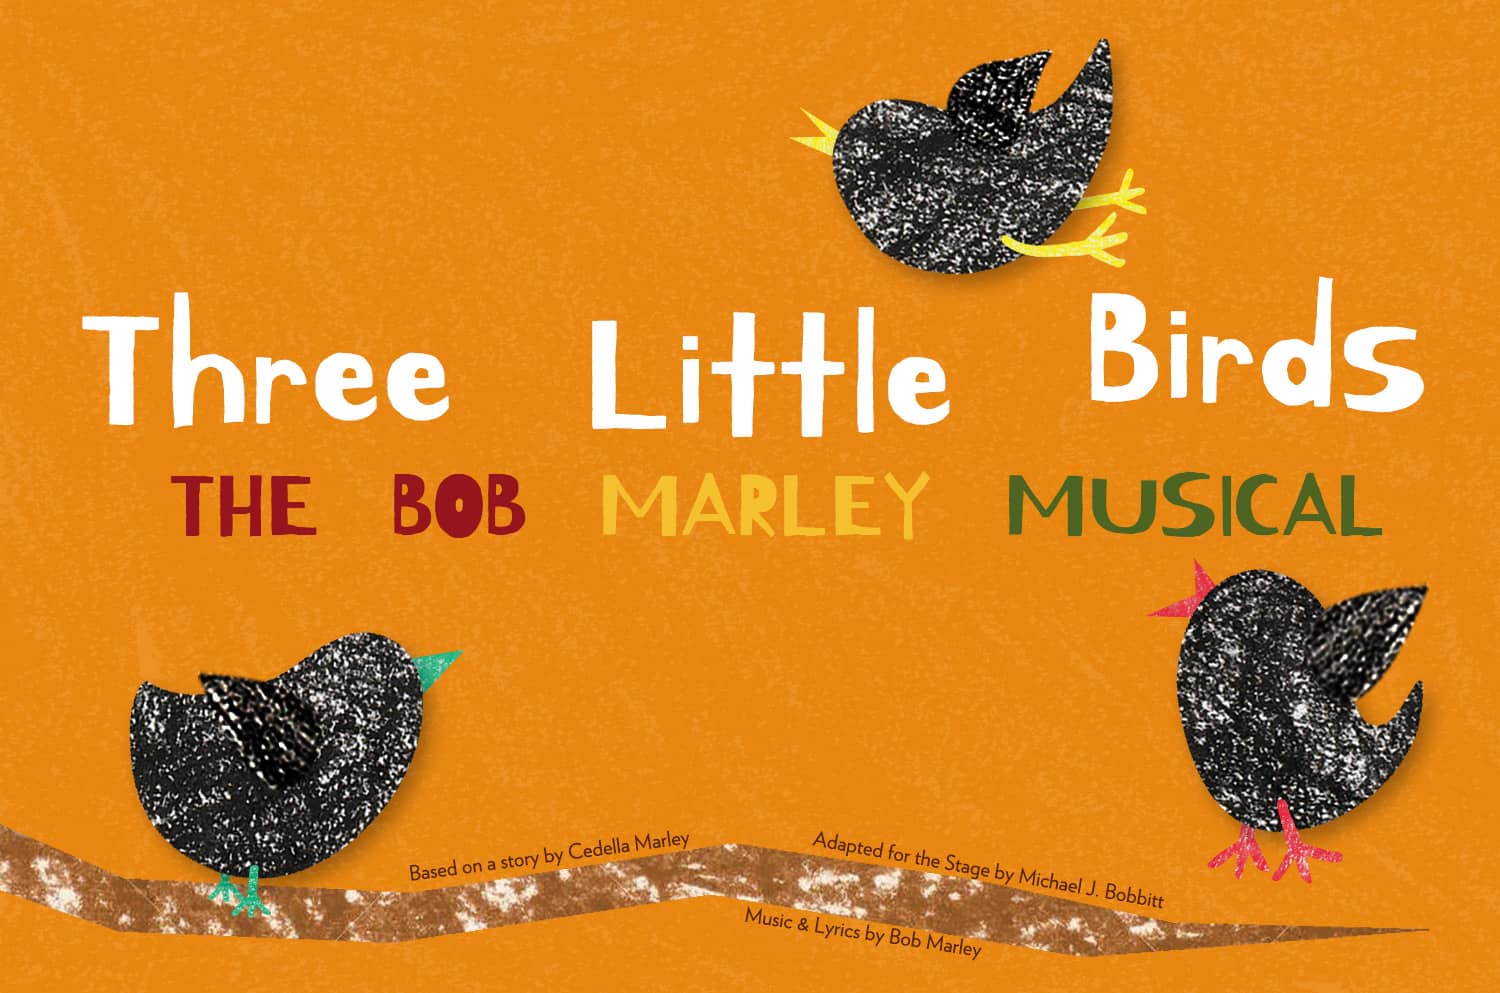 Three Little Birds show poster